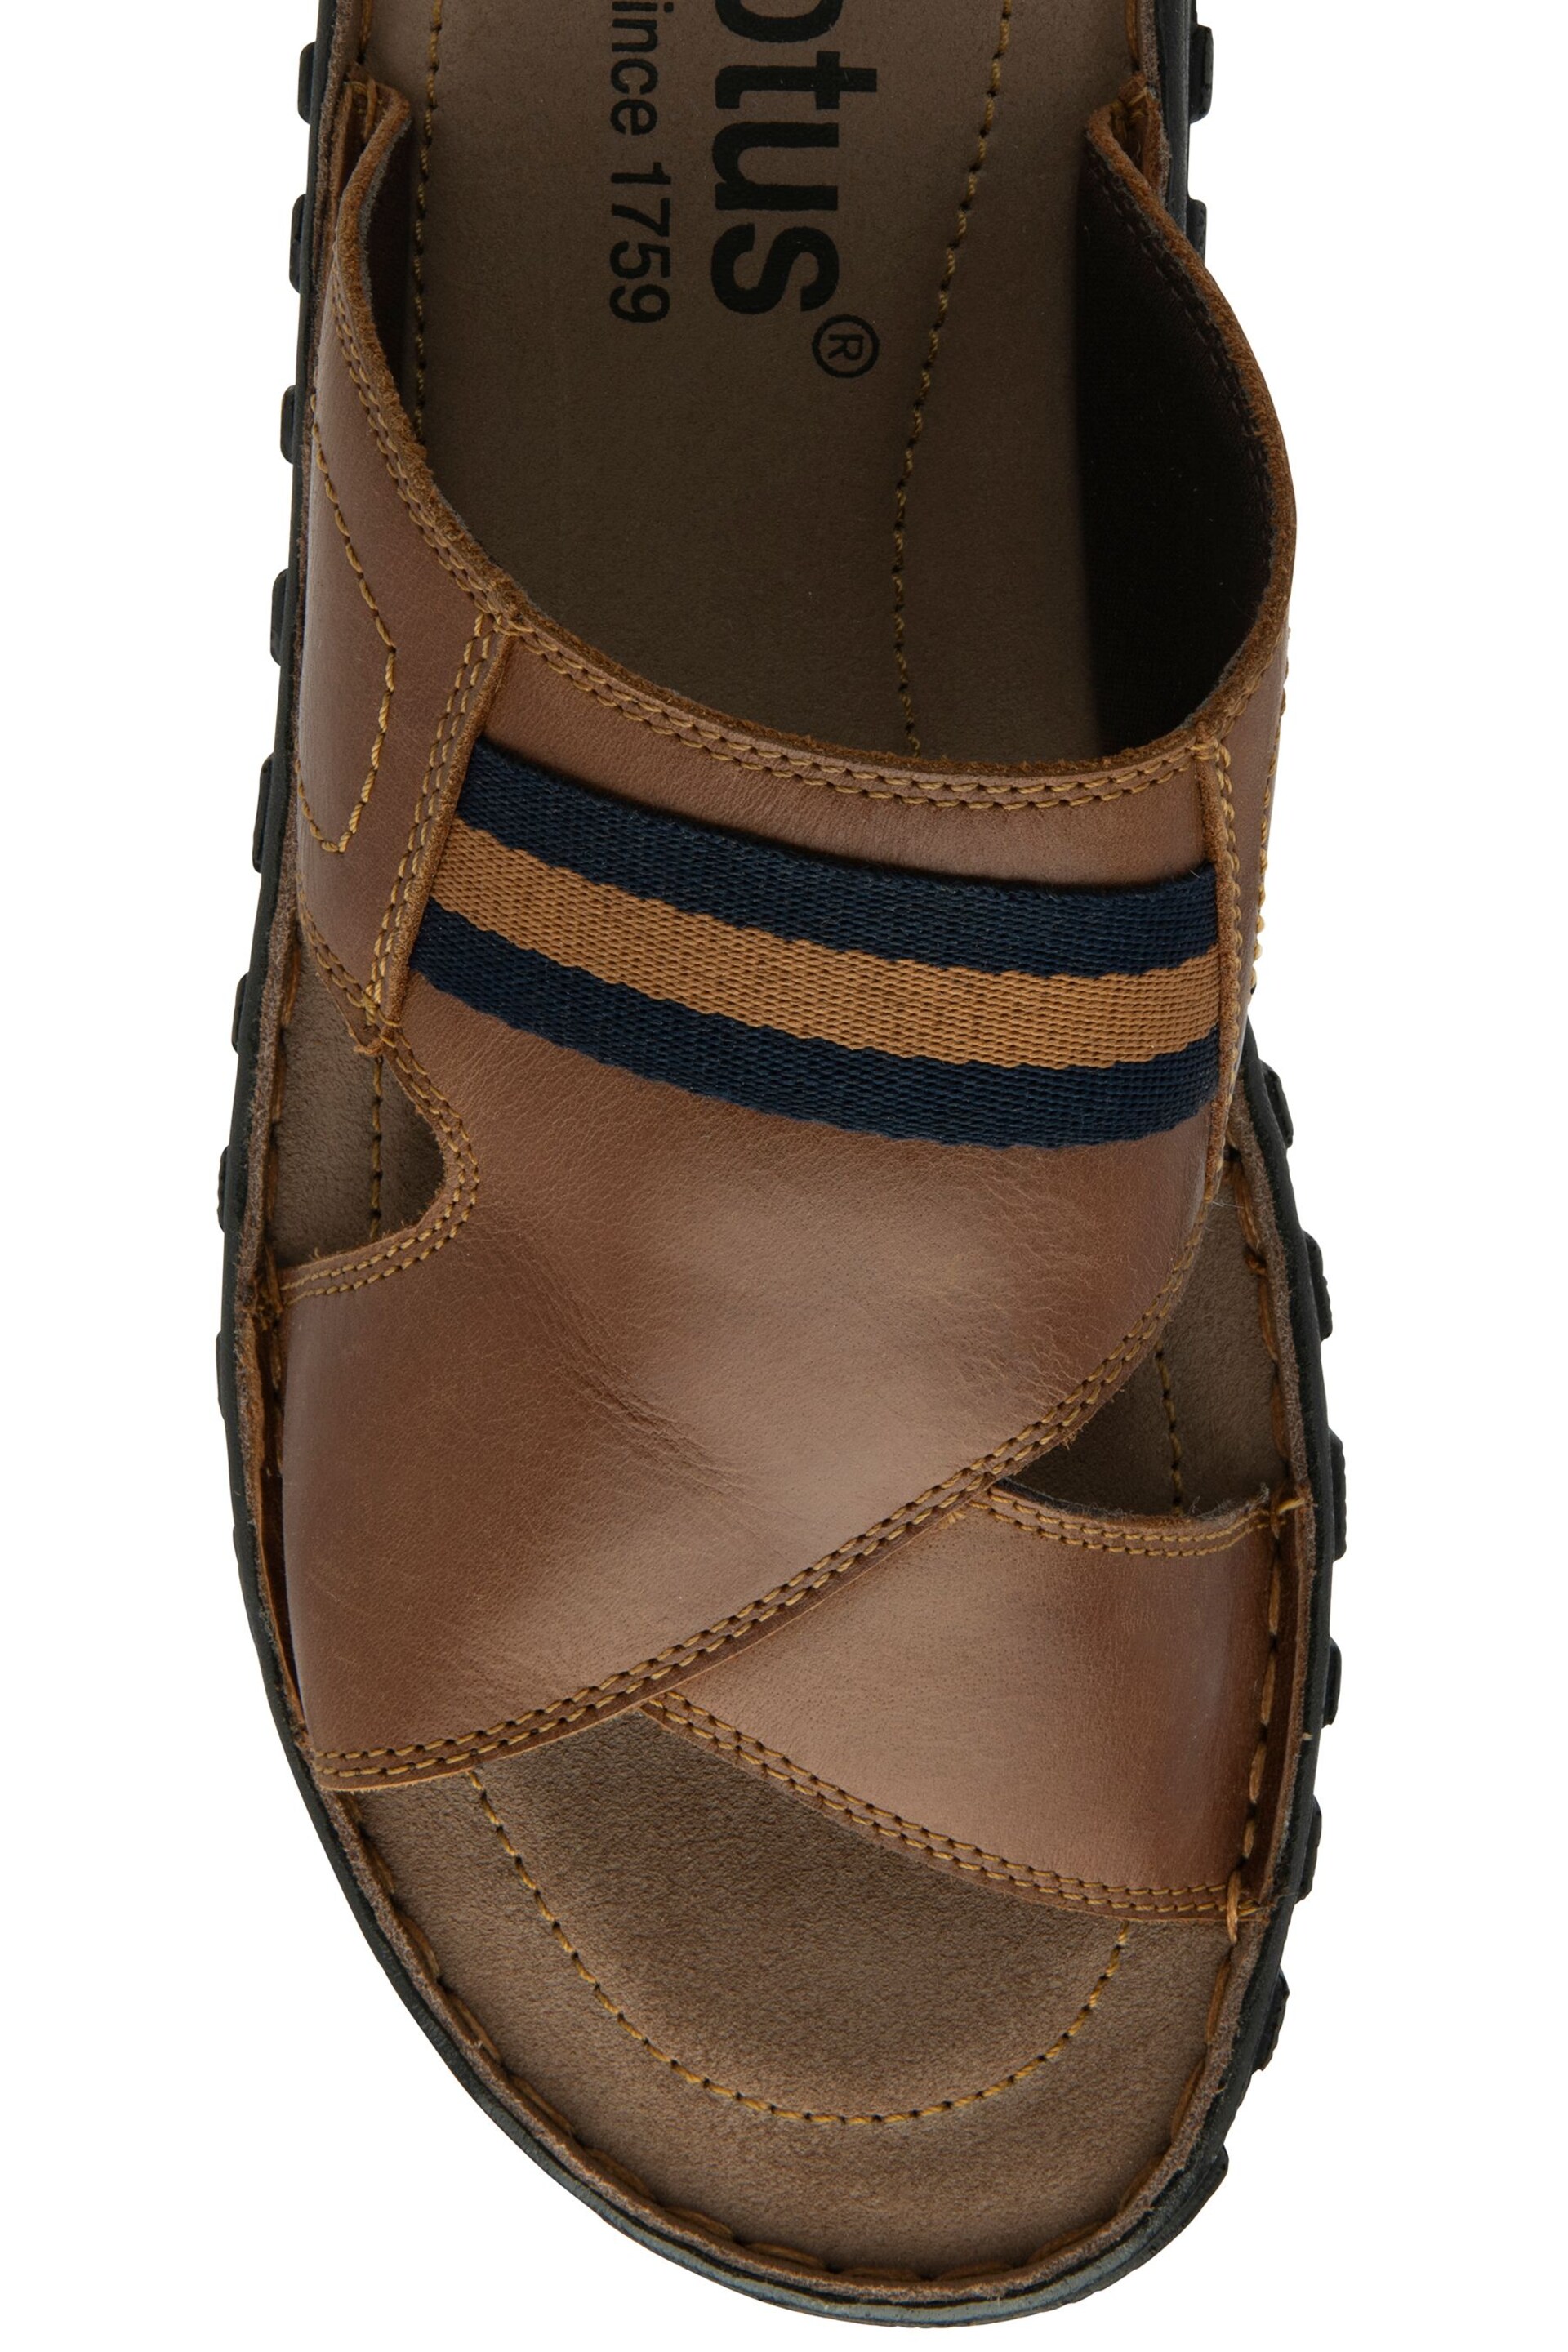 Lotus Brown Leather Mule Sandals - Image 4 of 4